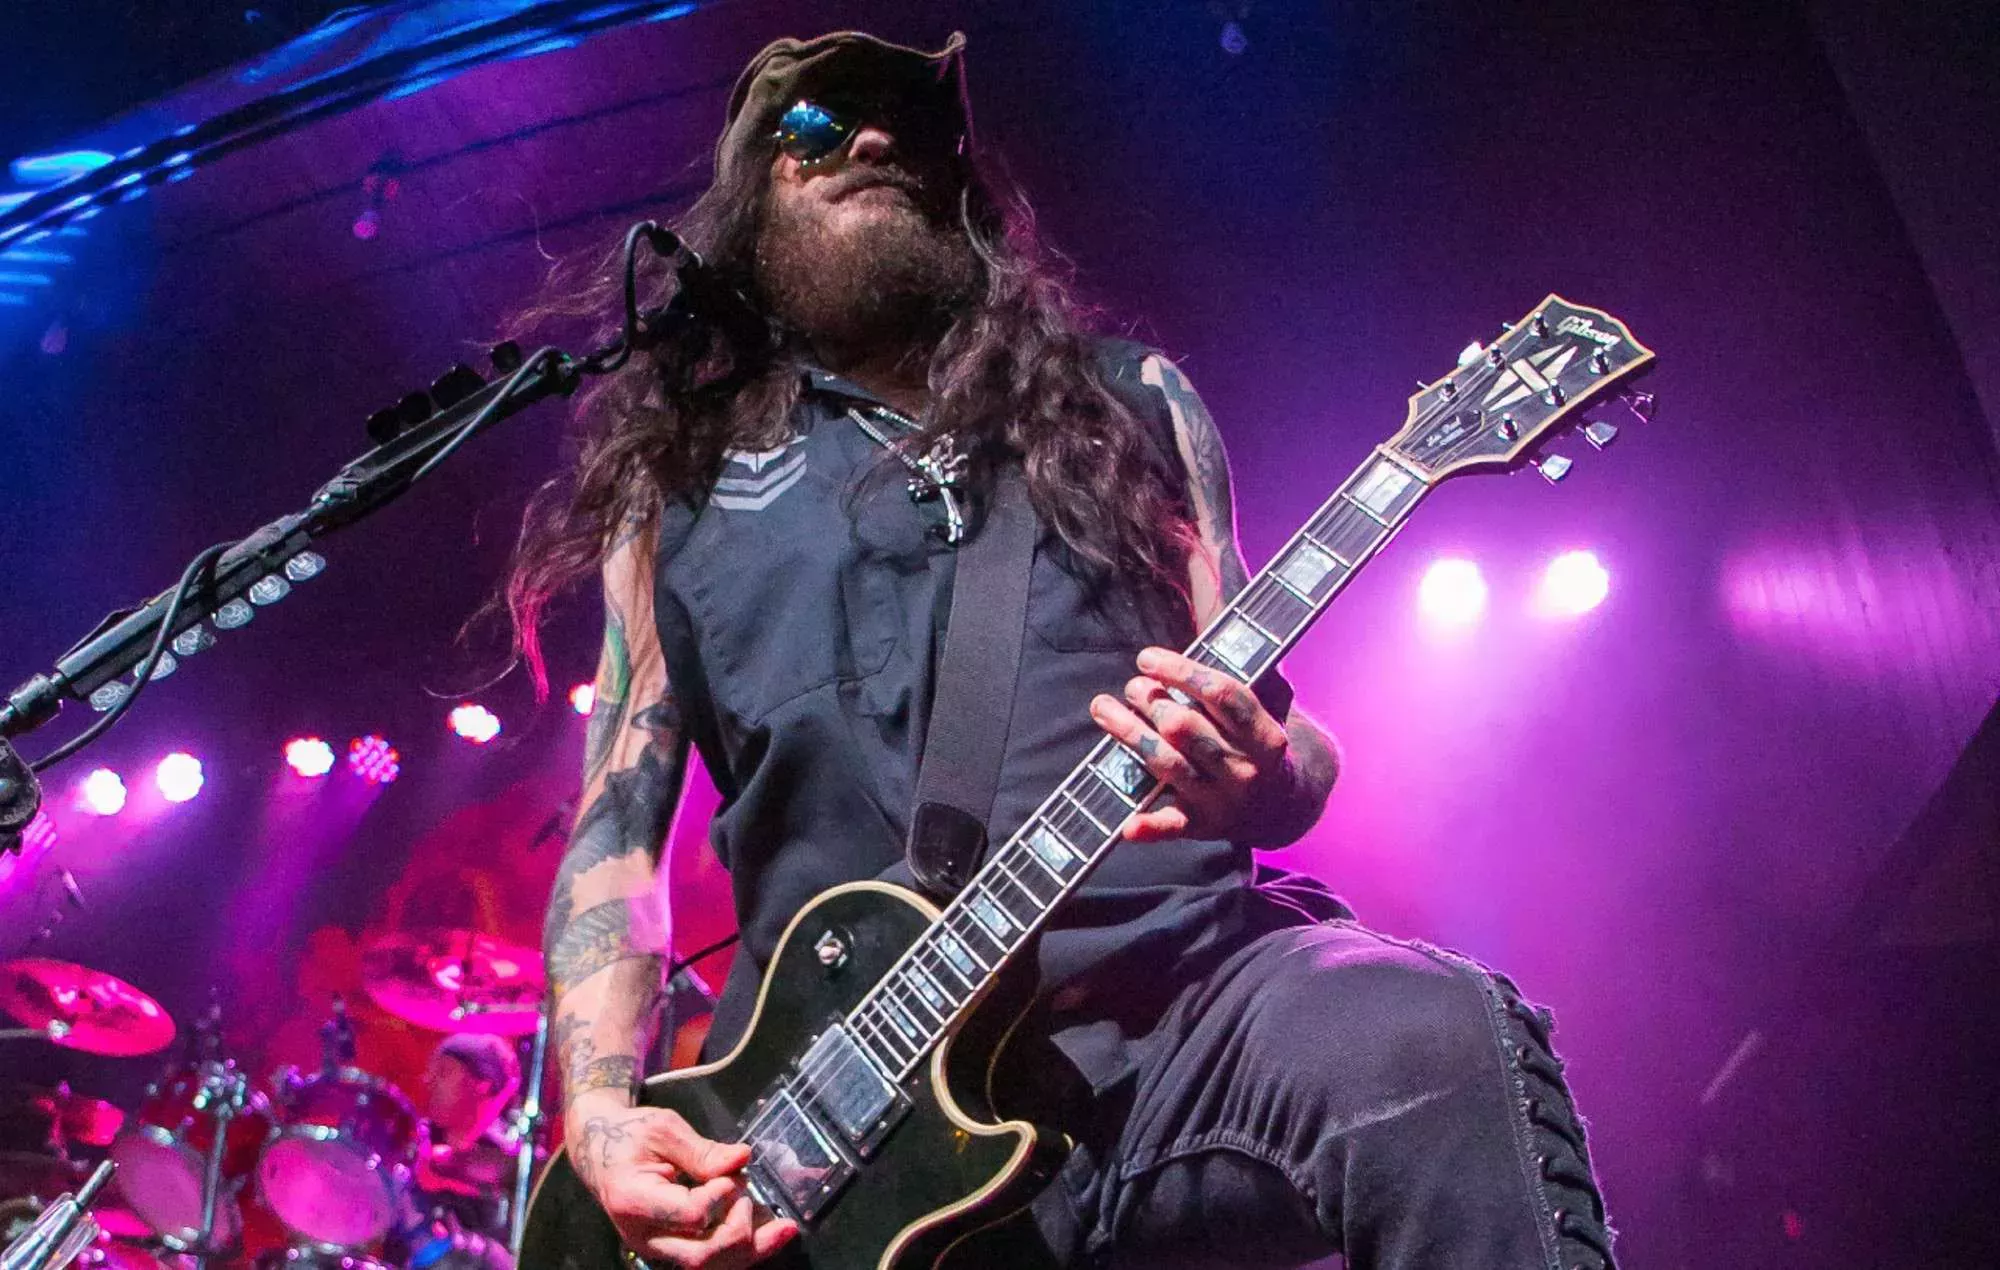 Muere Wayne Swinny, guitarrista de Saliva, tras sufrir una hemorragia cerebral durante una gira